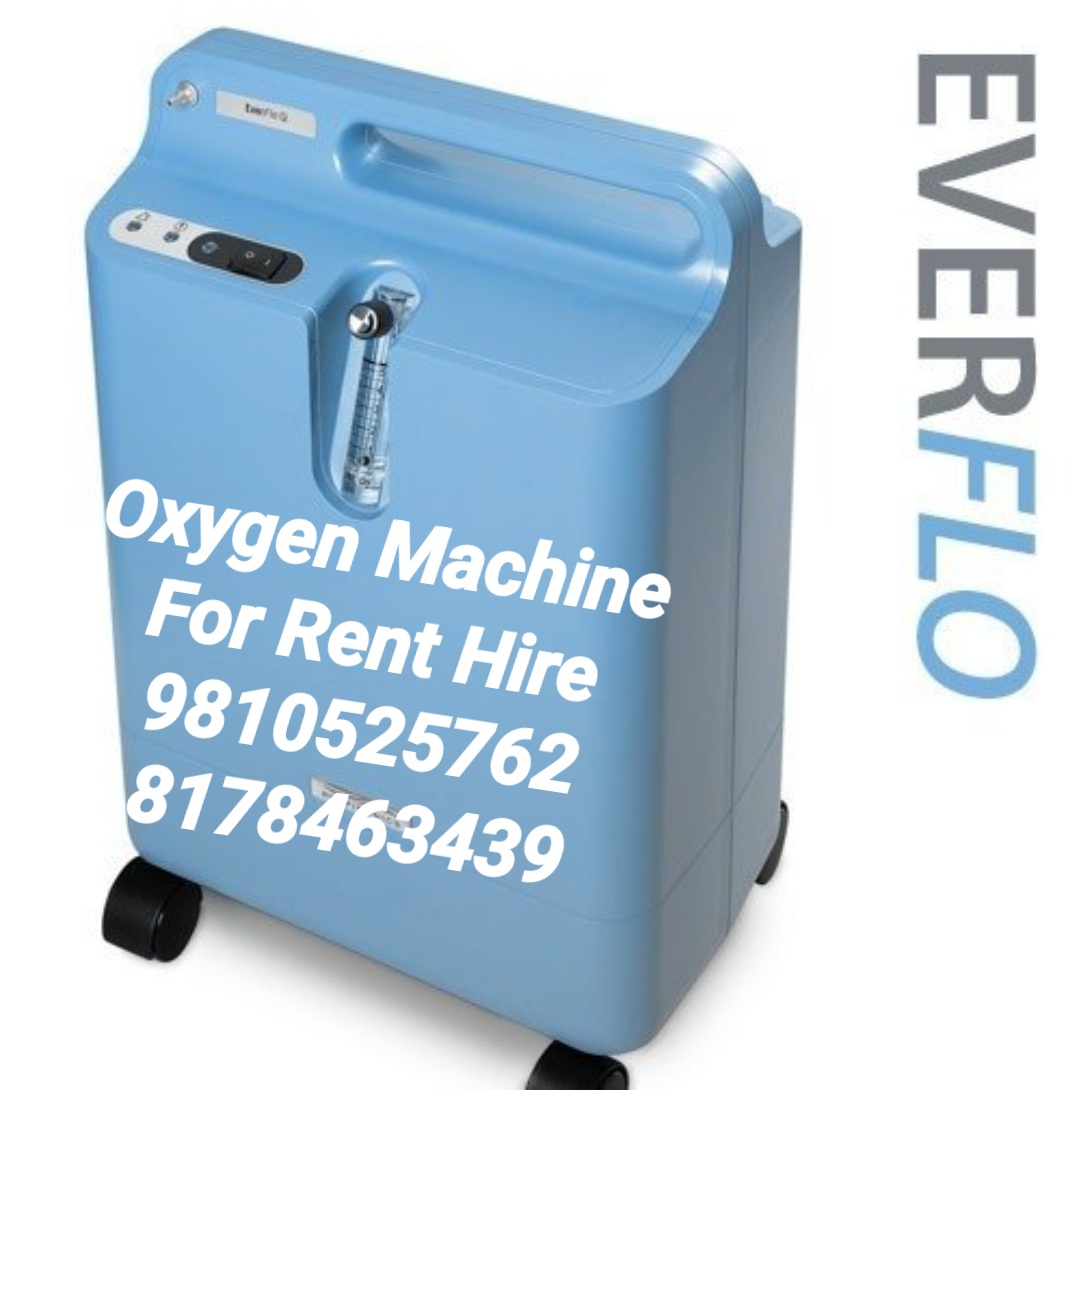 Oxygen Machine Repair in Laxmi Nagar 8178463439